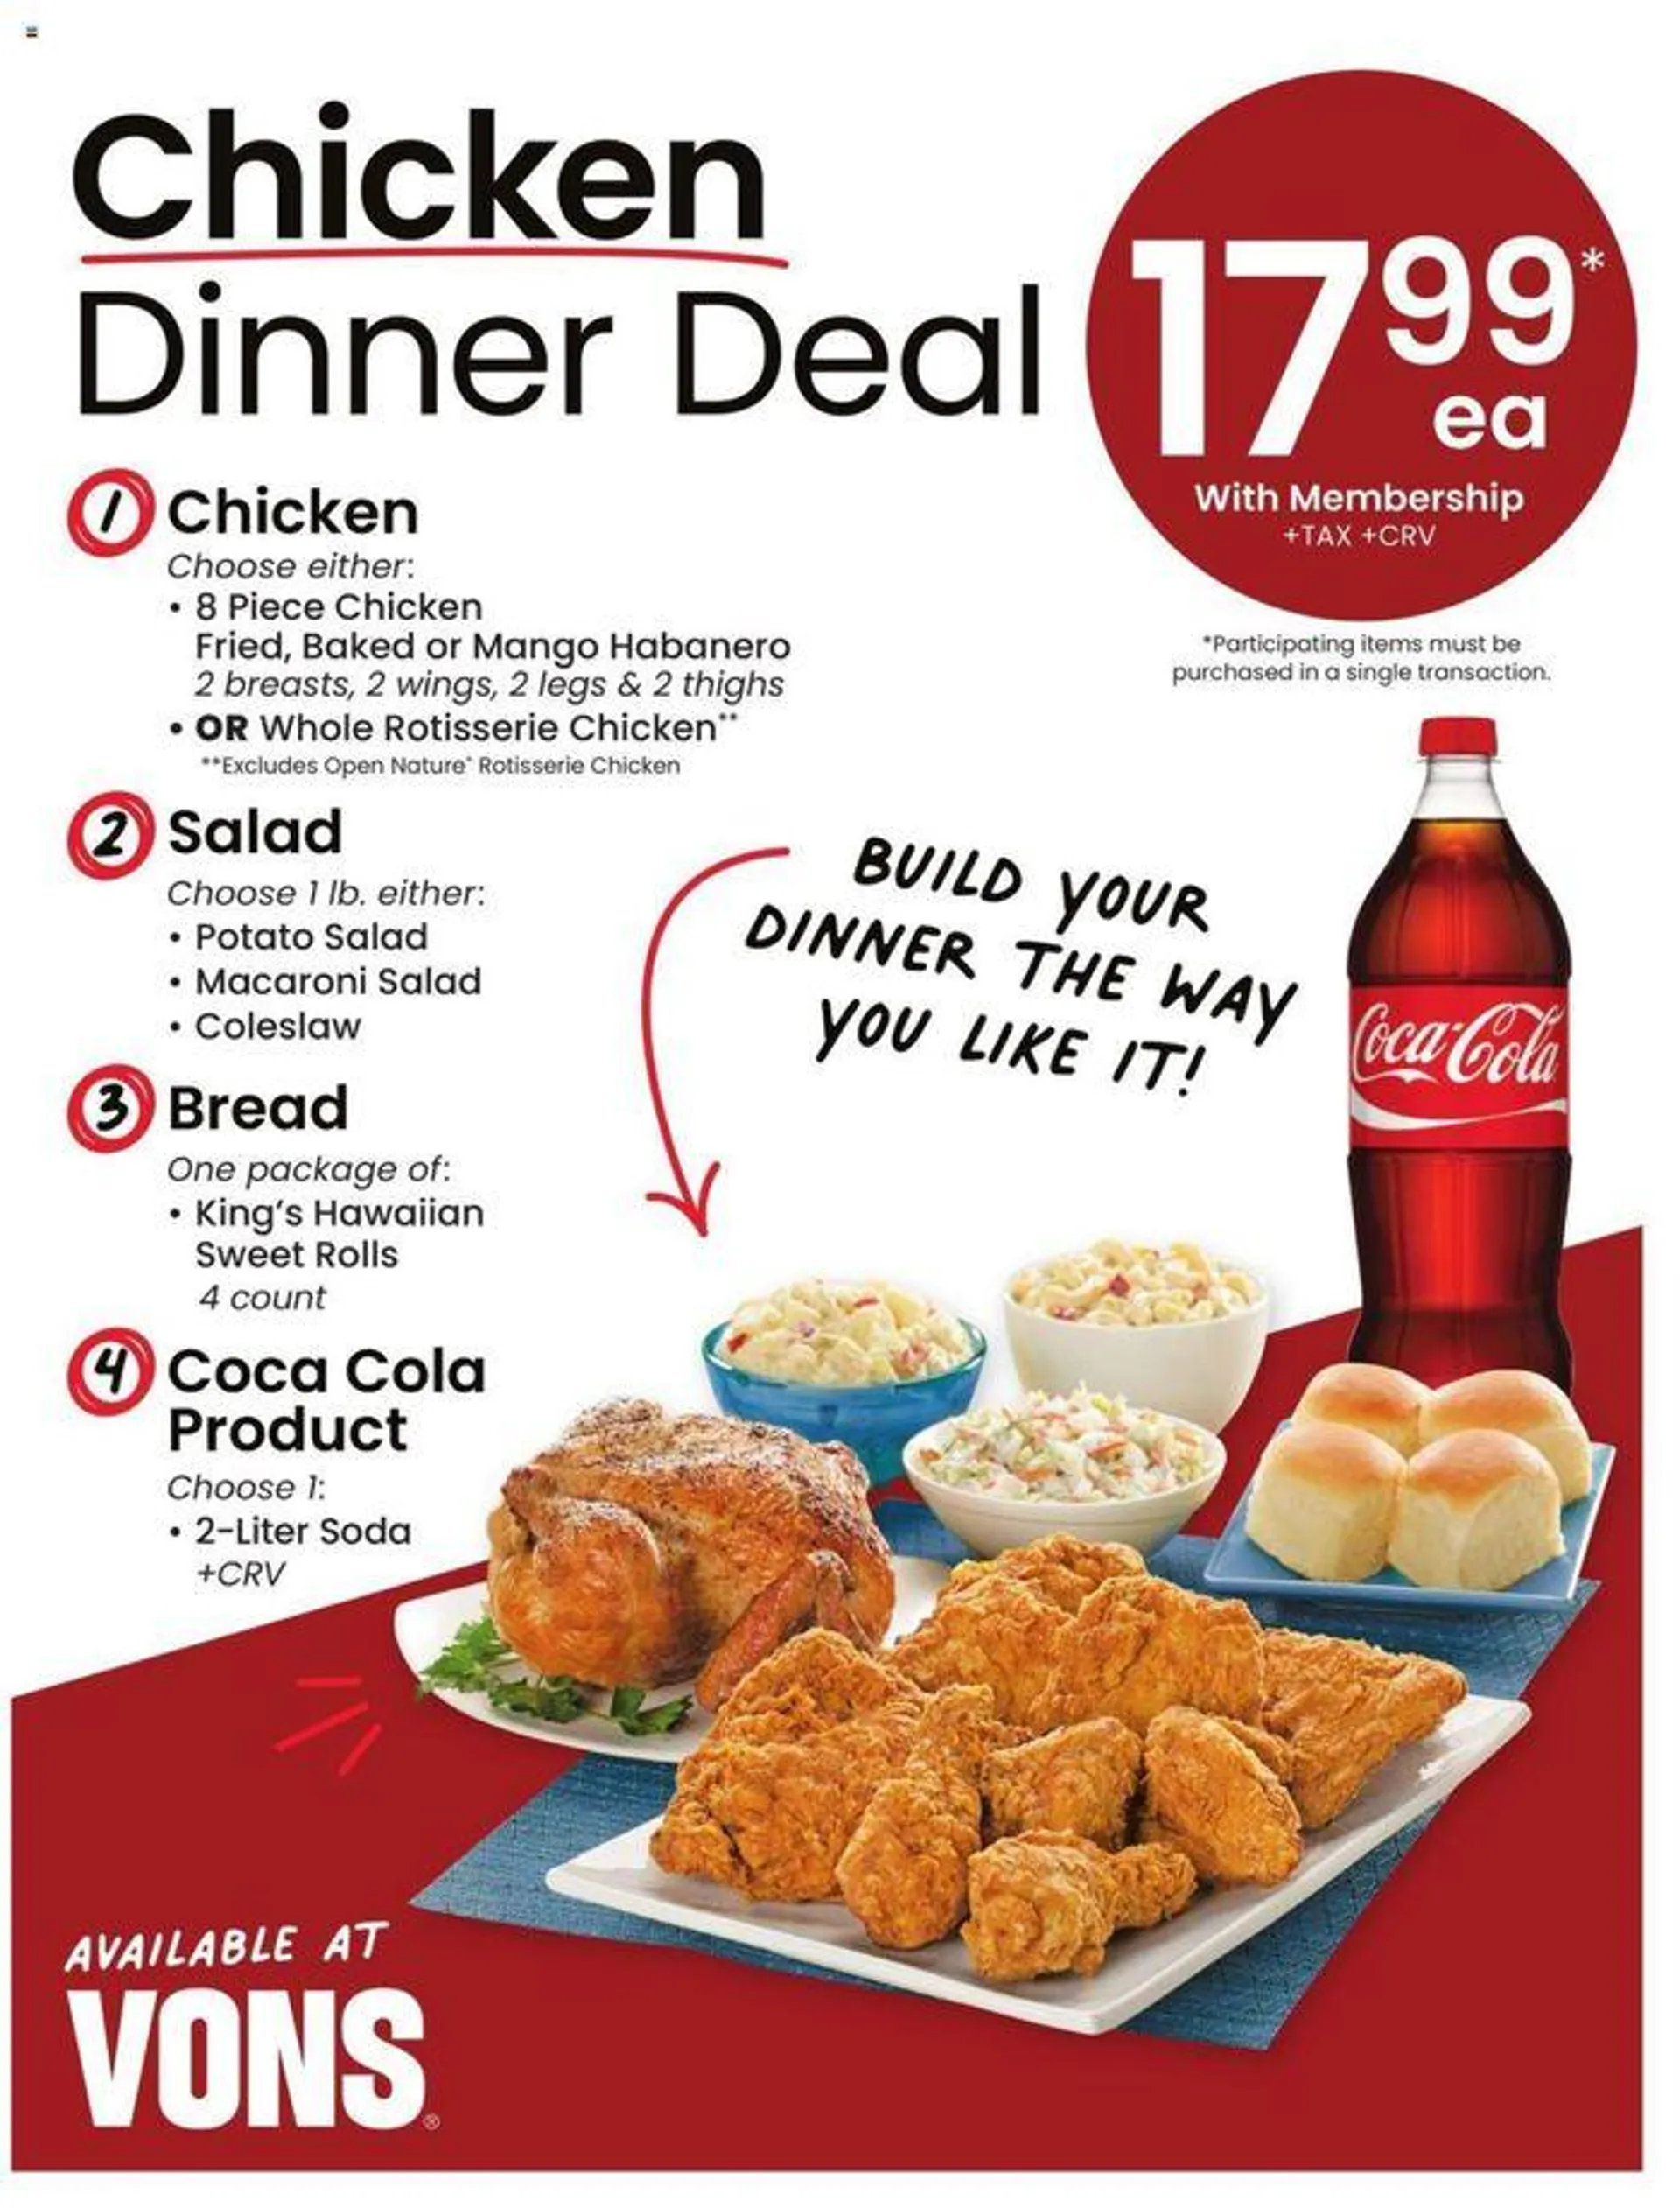 Chicken Dinner Deal - 1